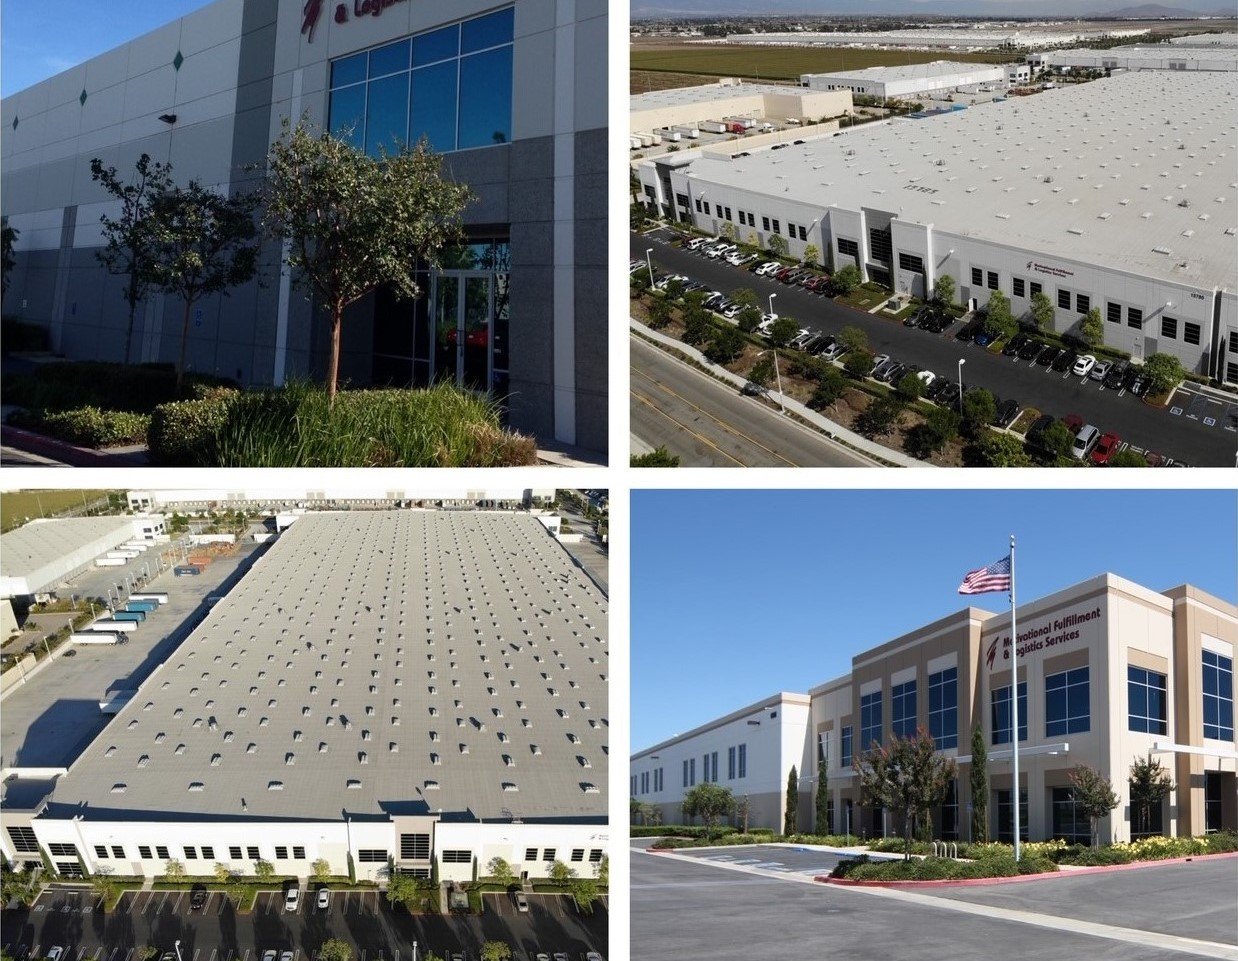 Motivational Logistics facilities in California’s Inland Empire, campus-style warehousing